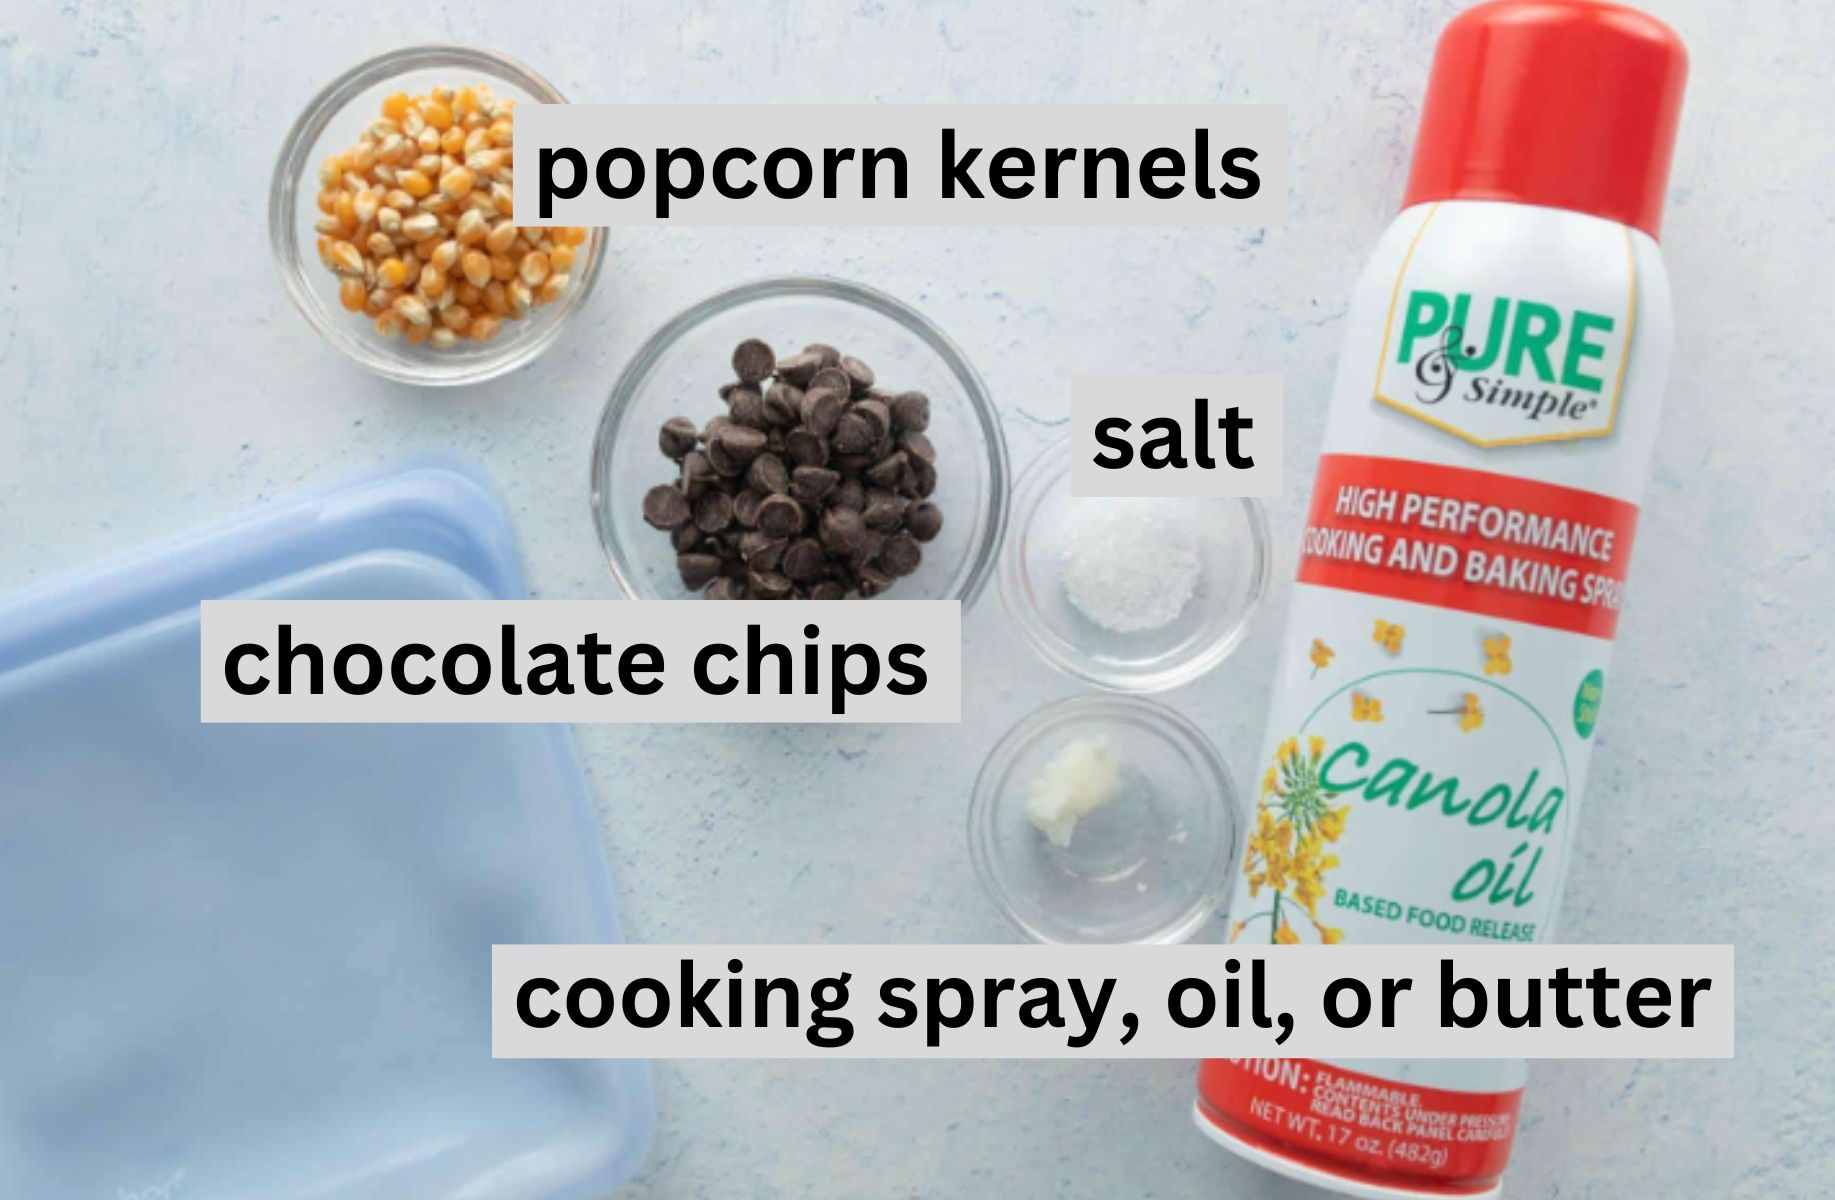 stasher bag, popcorn kernels, chocolate chips, ingredients in bowls